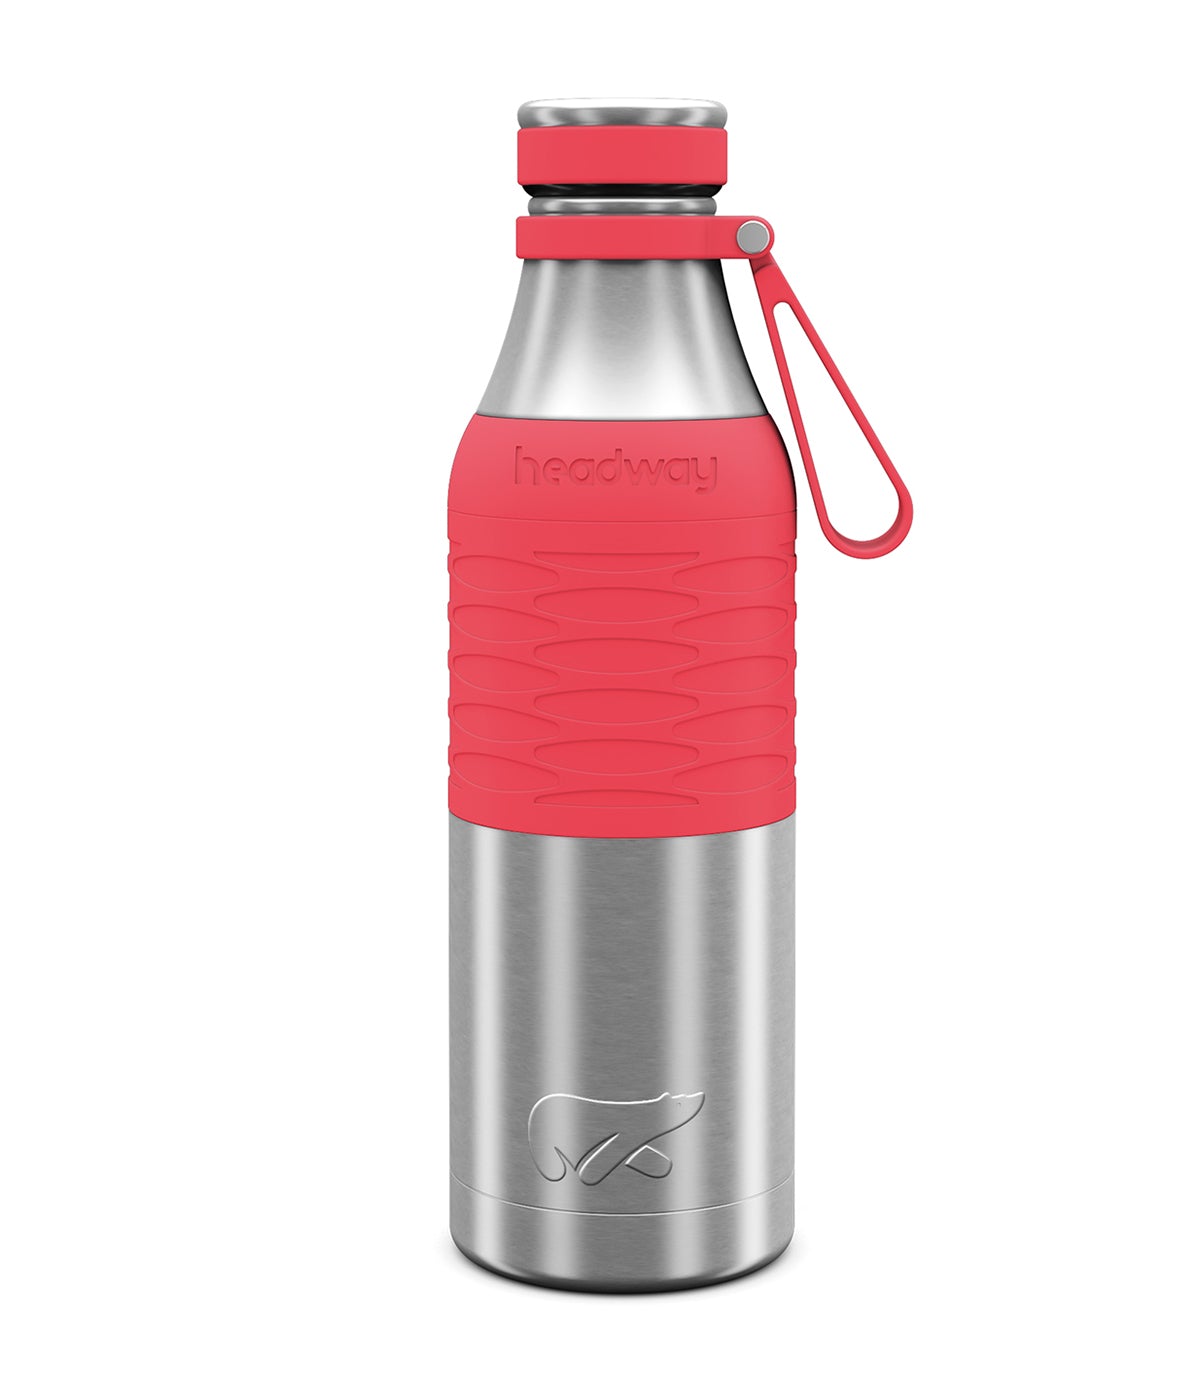 Burell Insulated Water Bottle